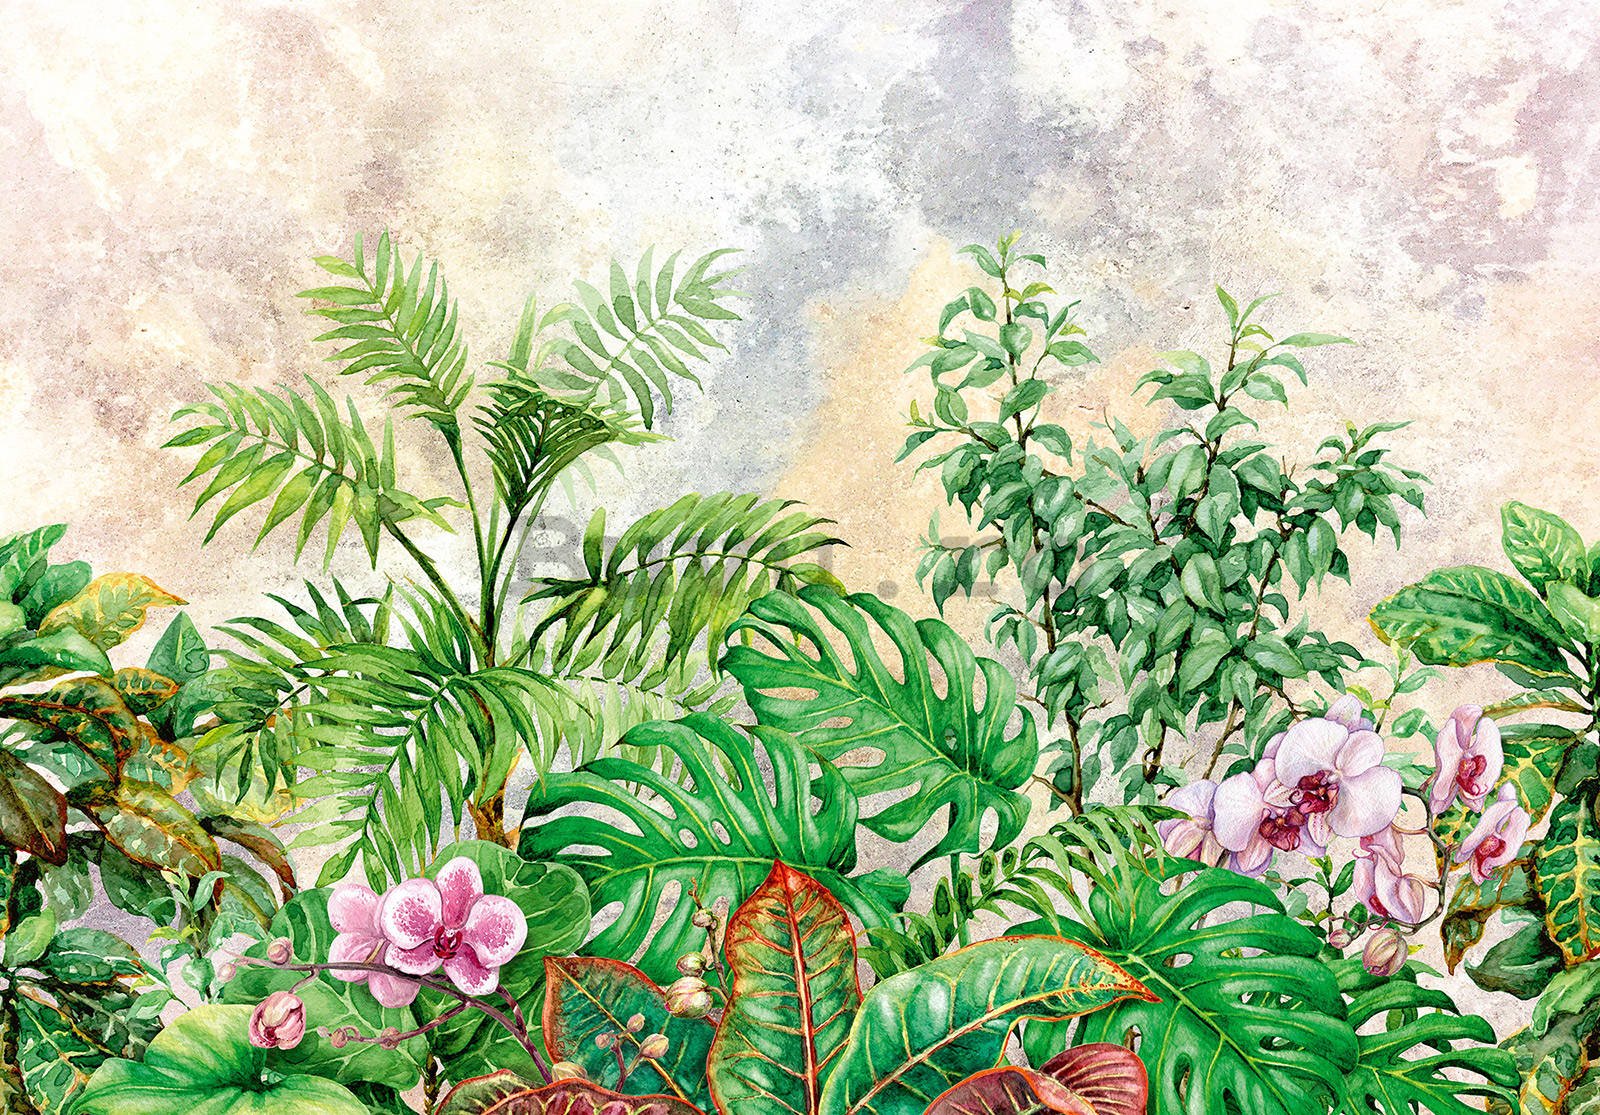 Fototapet vlies: Plante pictate - 416x254 cm